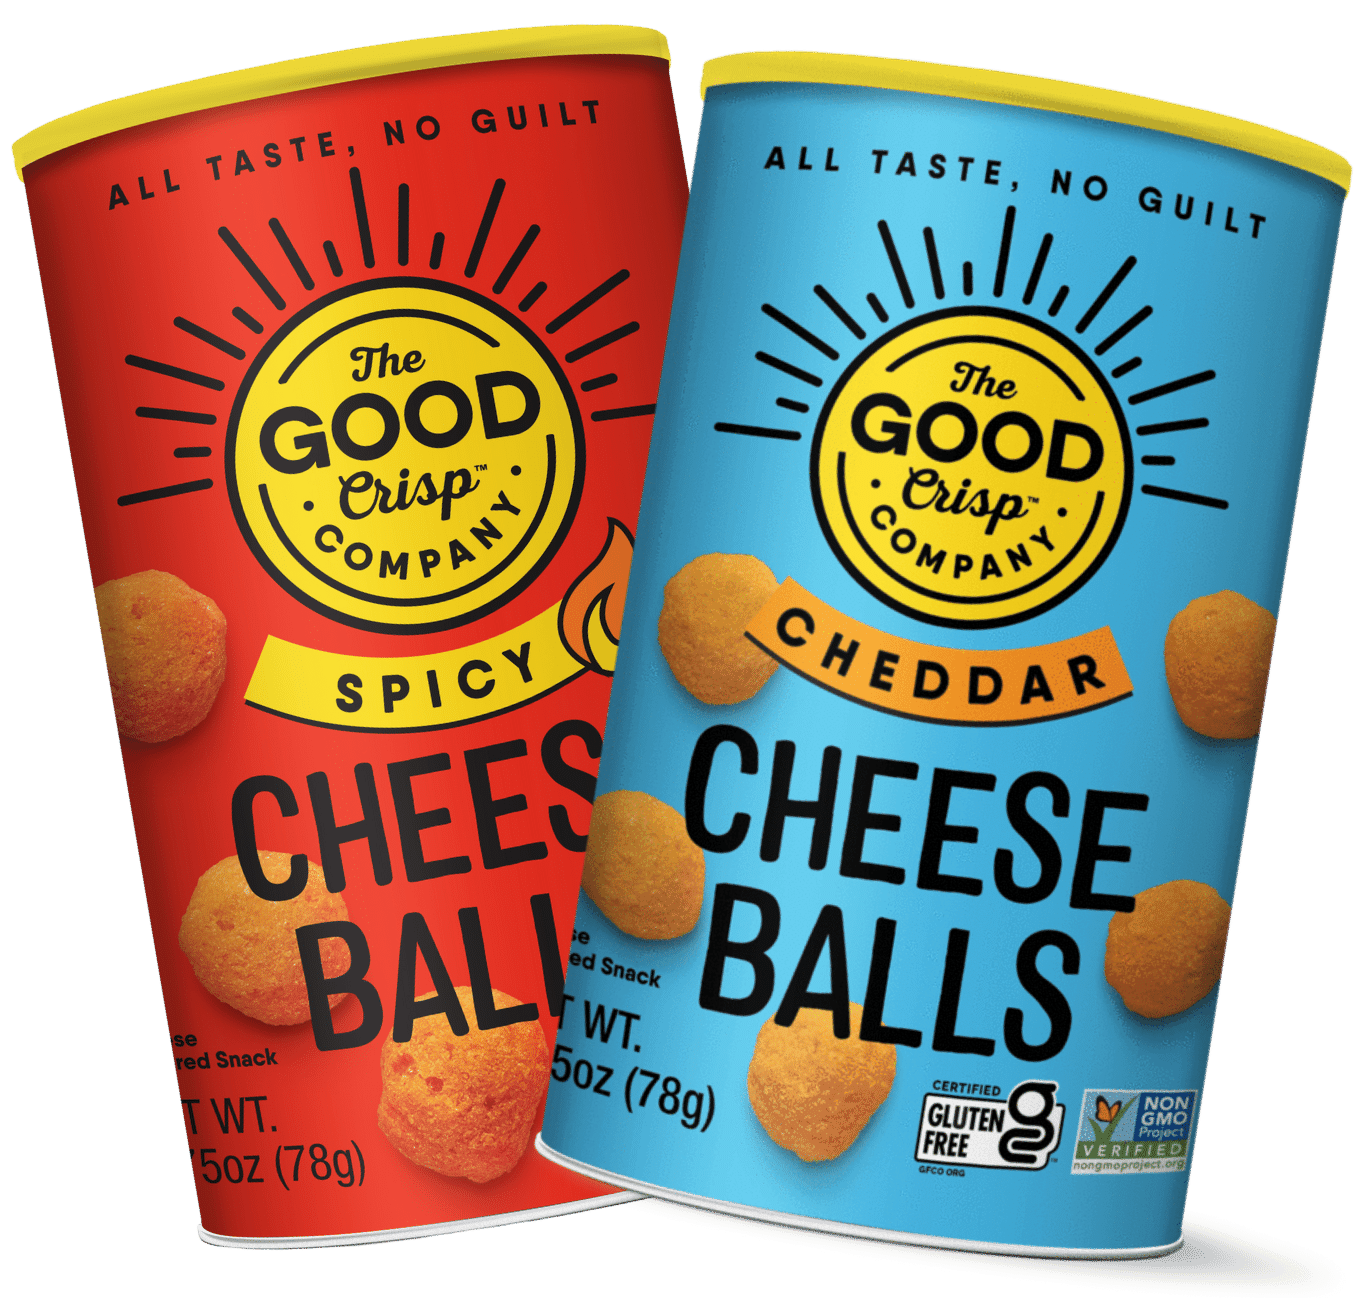 spicy cheeseballs and cheddar cheeseballs